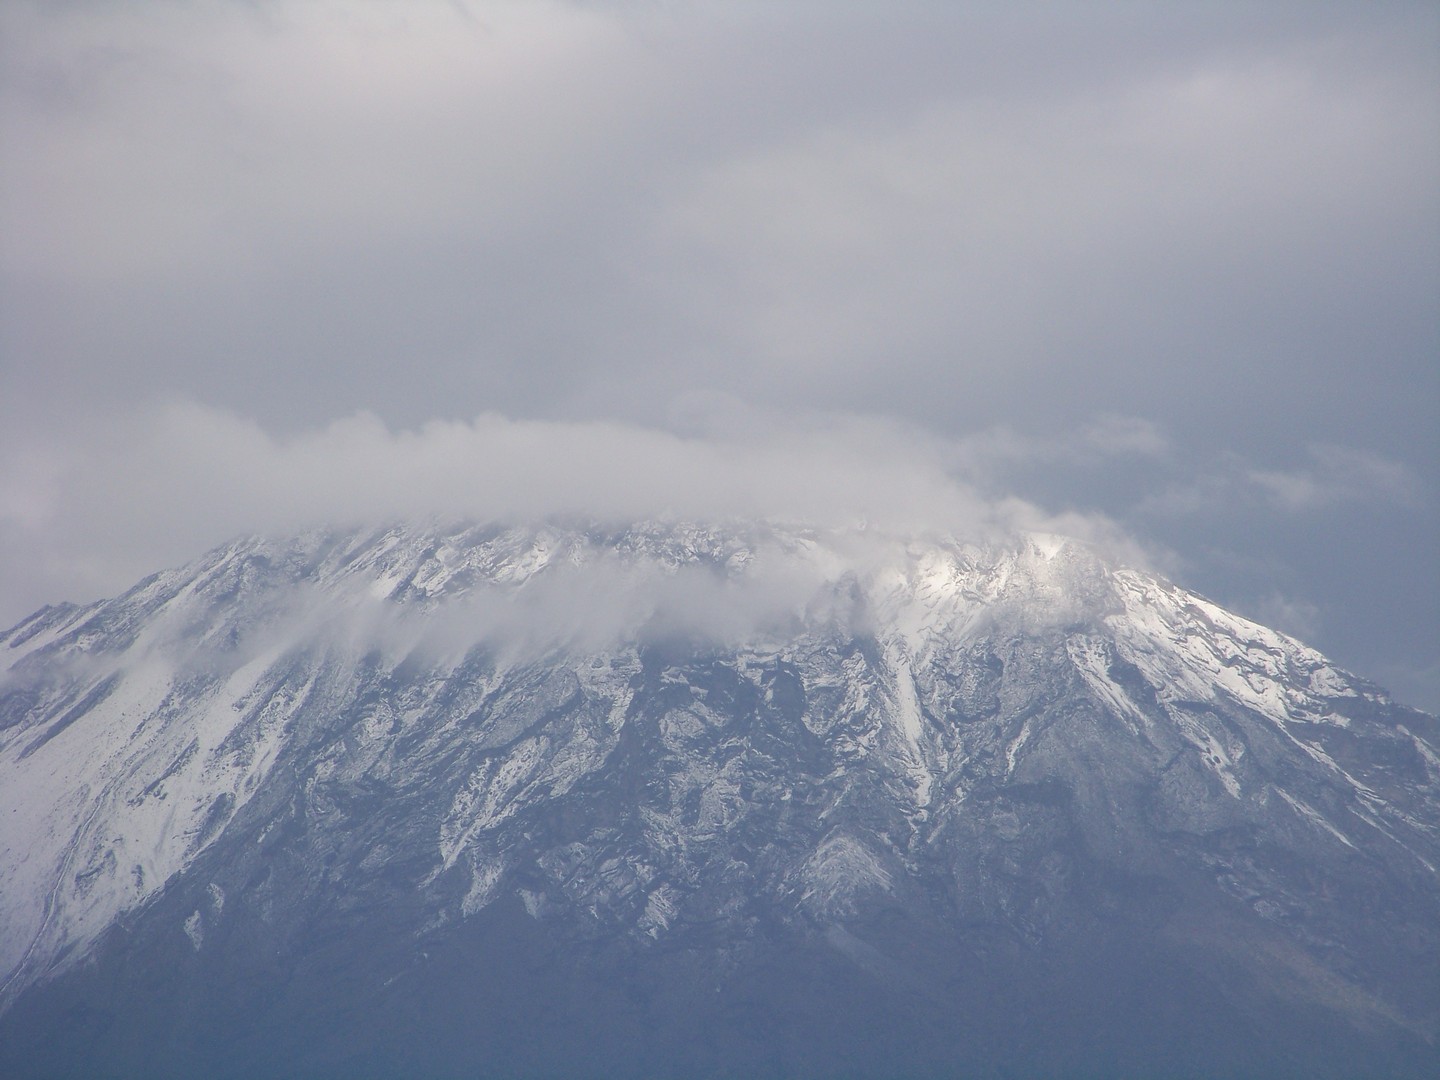 Mount Meru with snow